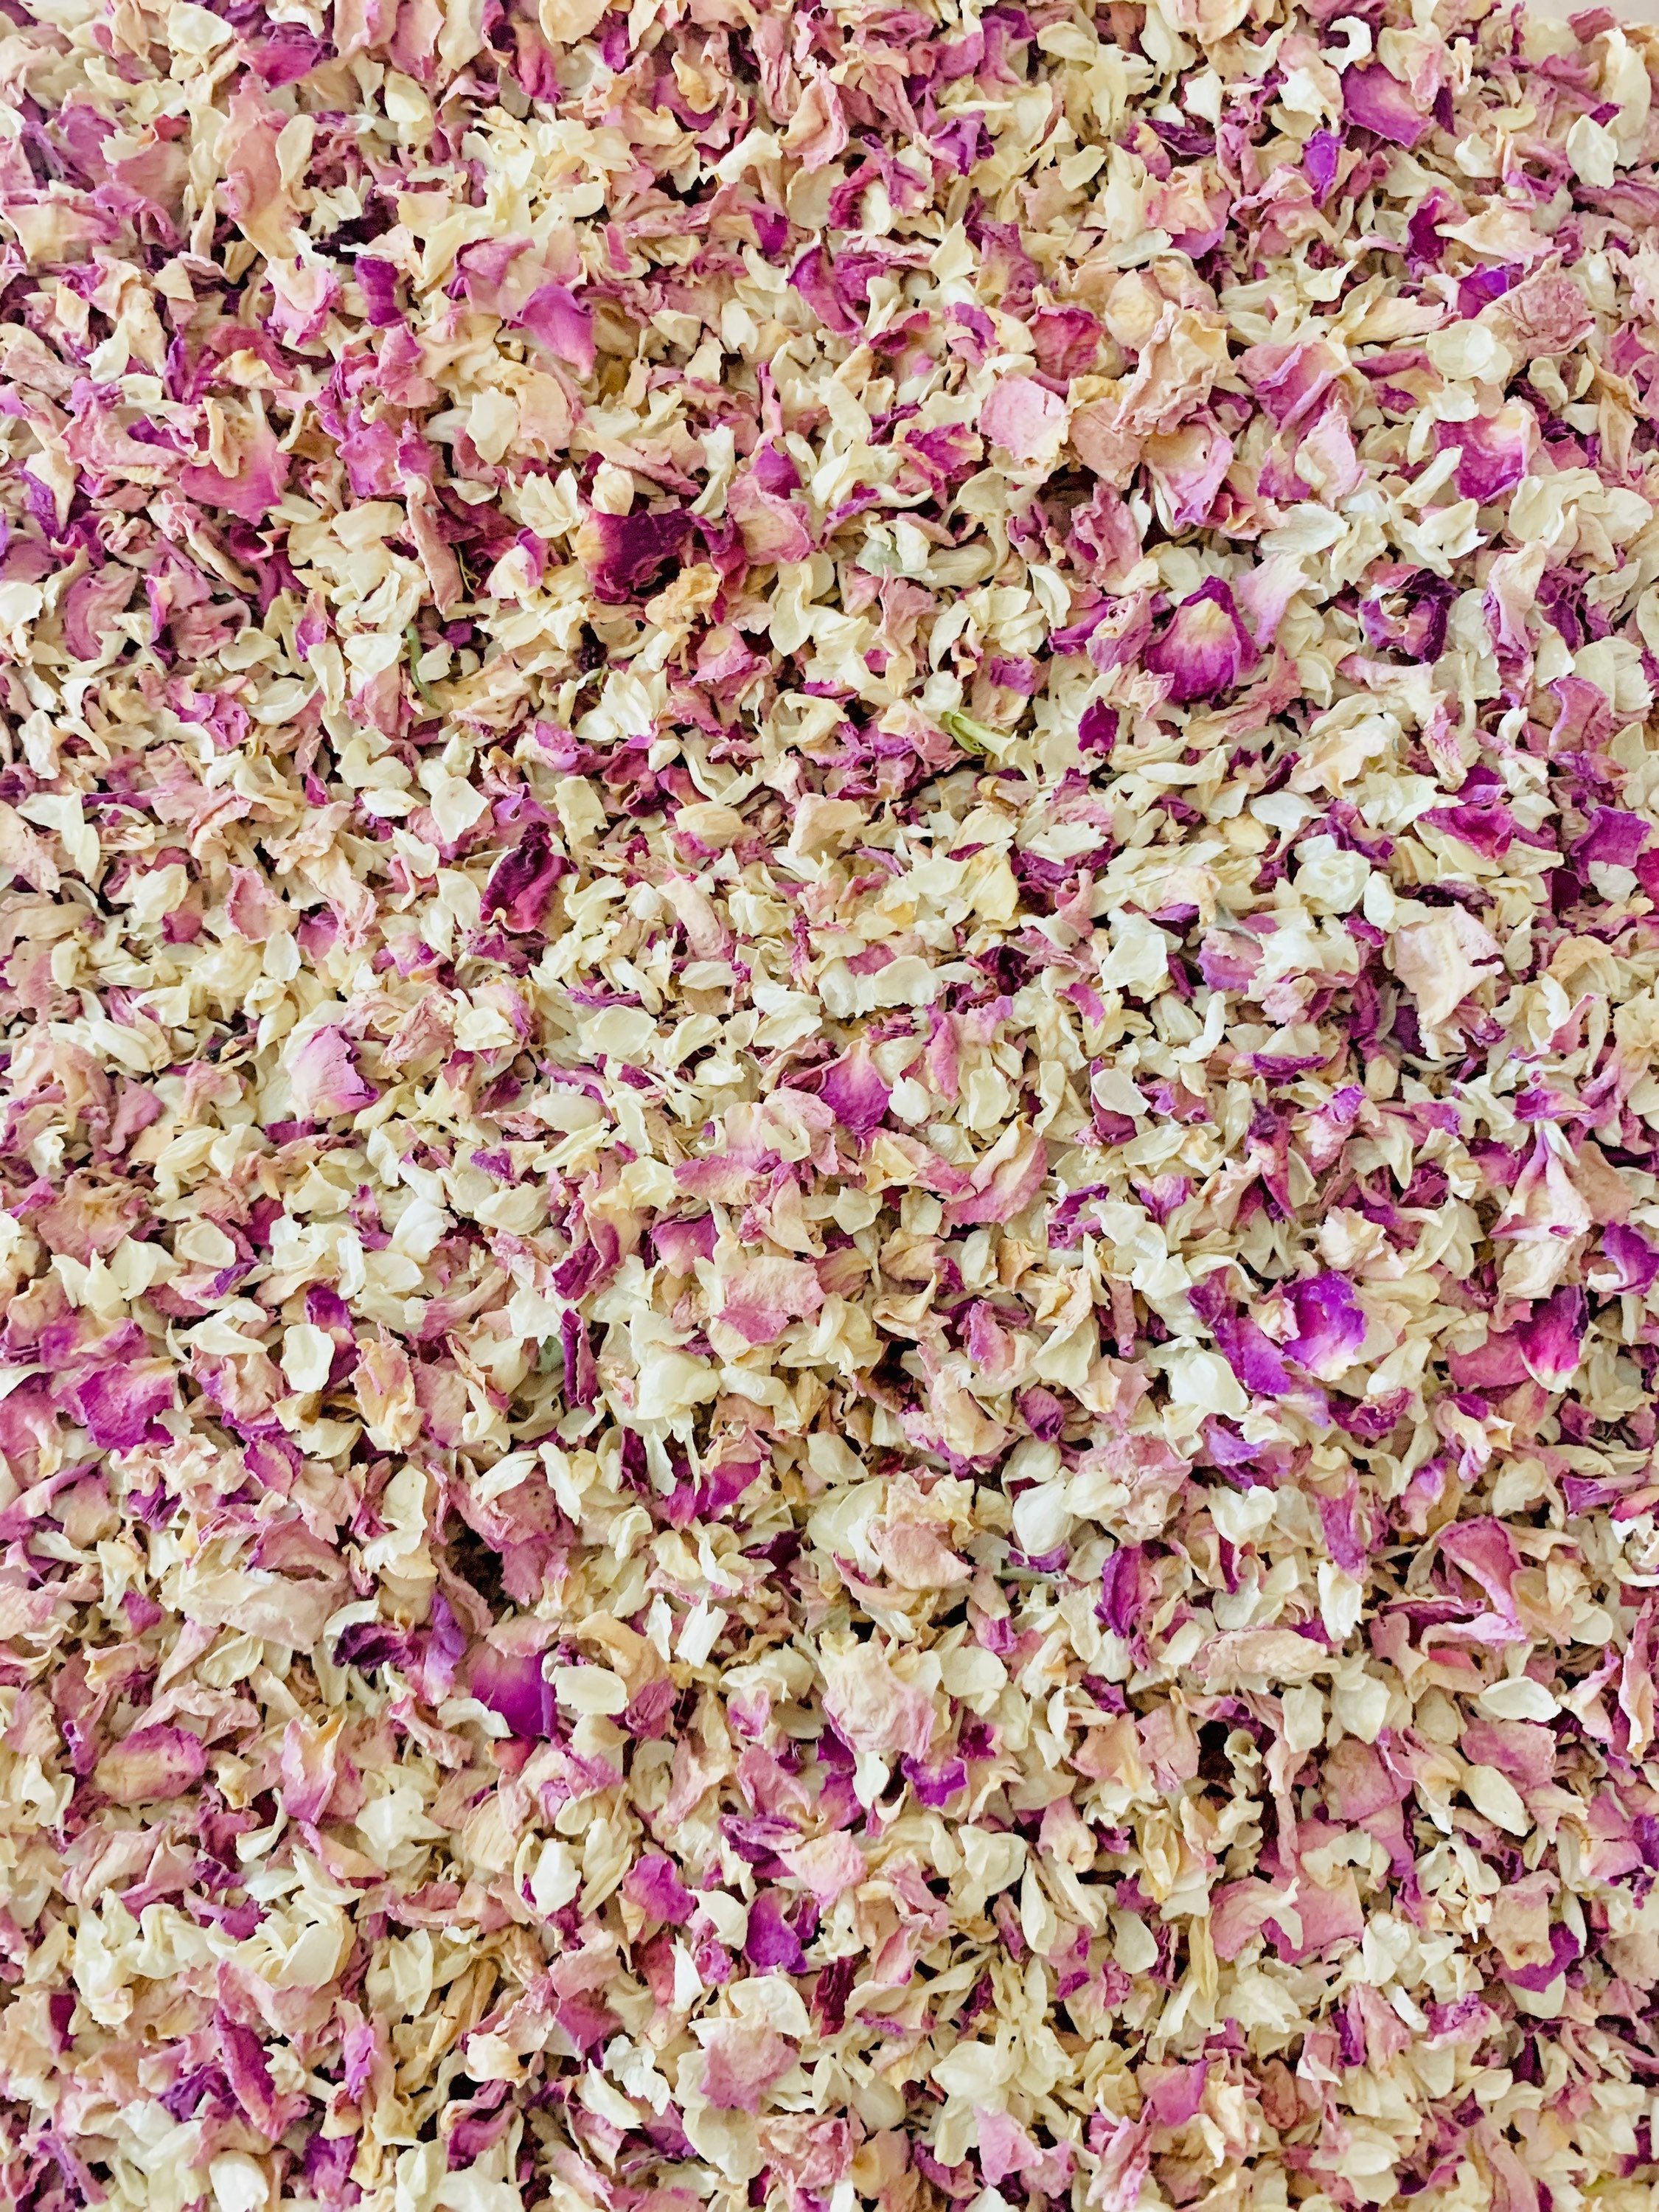 Rose Gold Biodegradable Wedding Confetti Natural Petals 1L Pink Ivory 